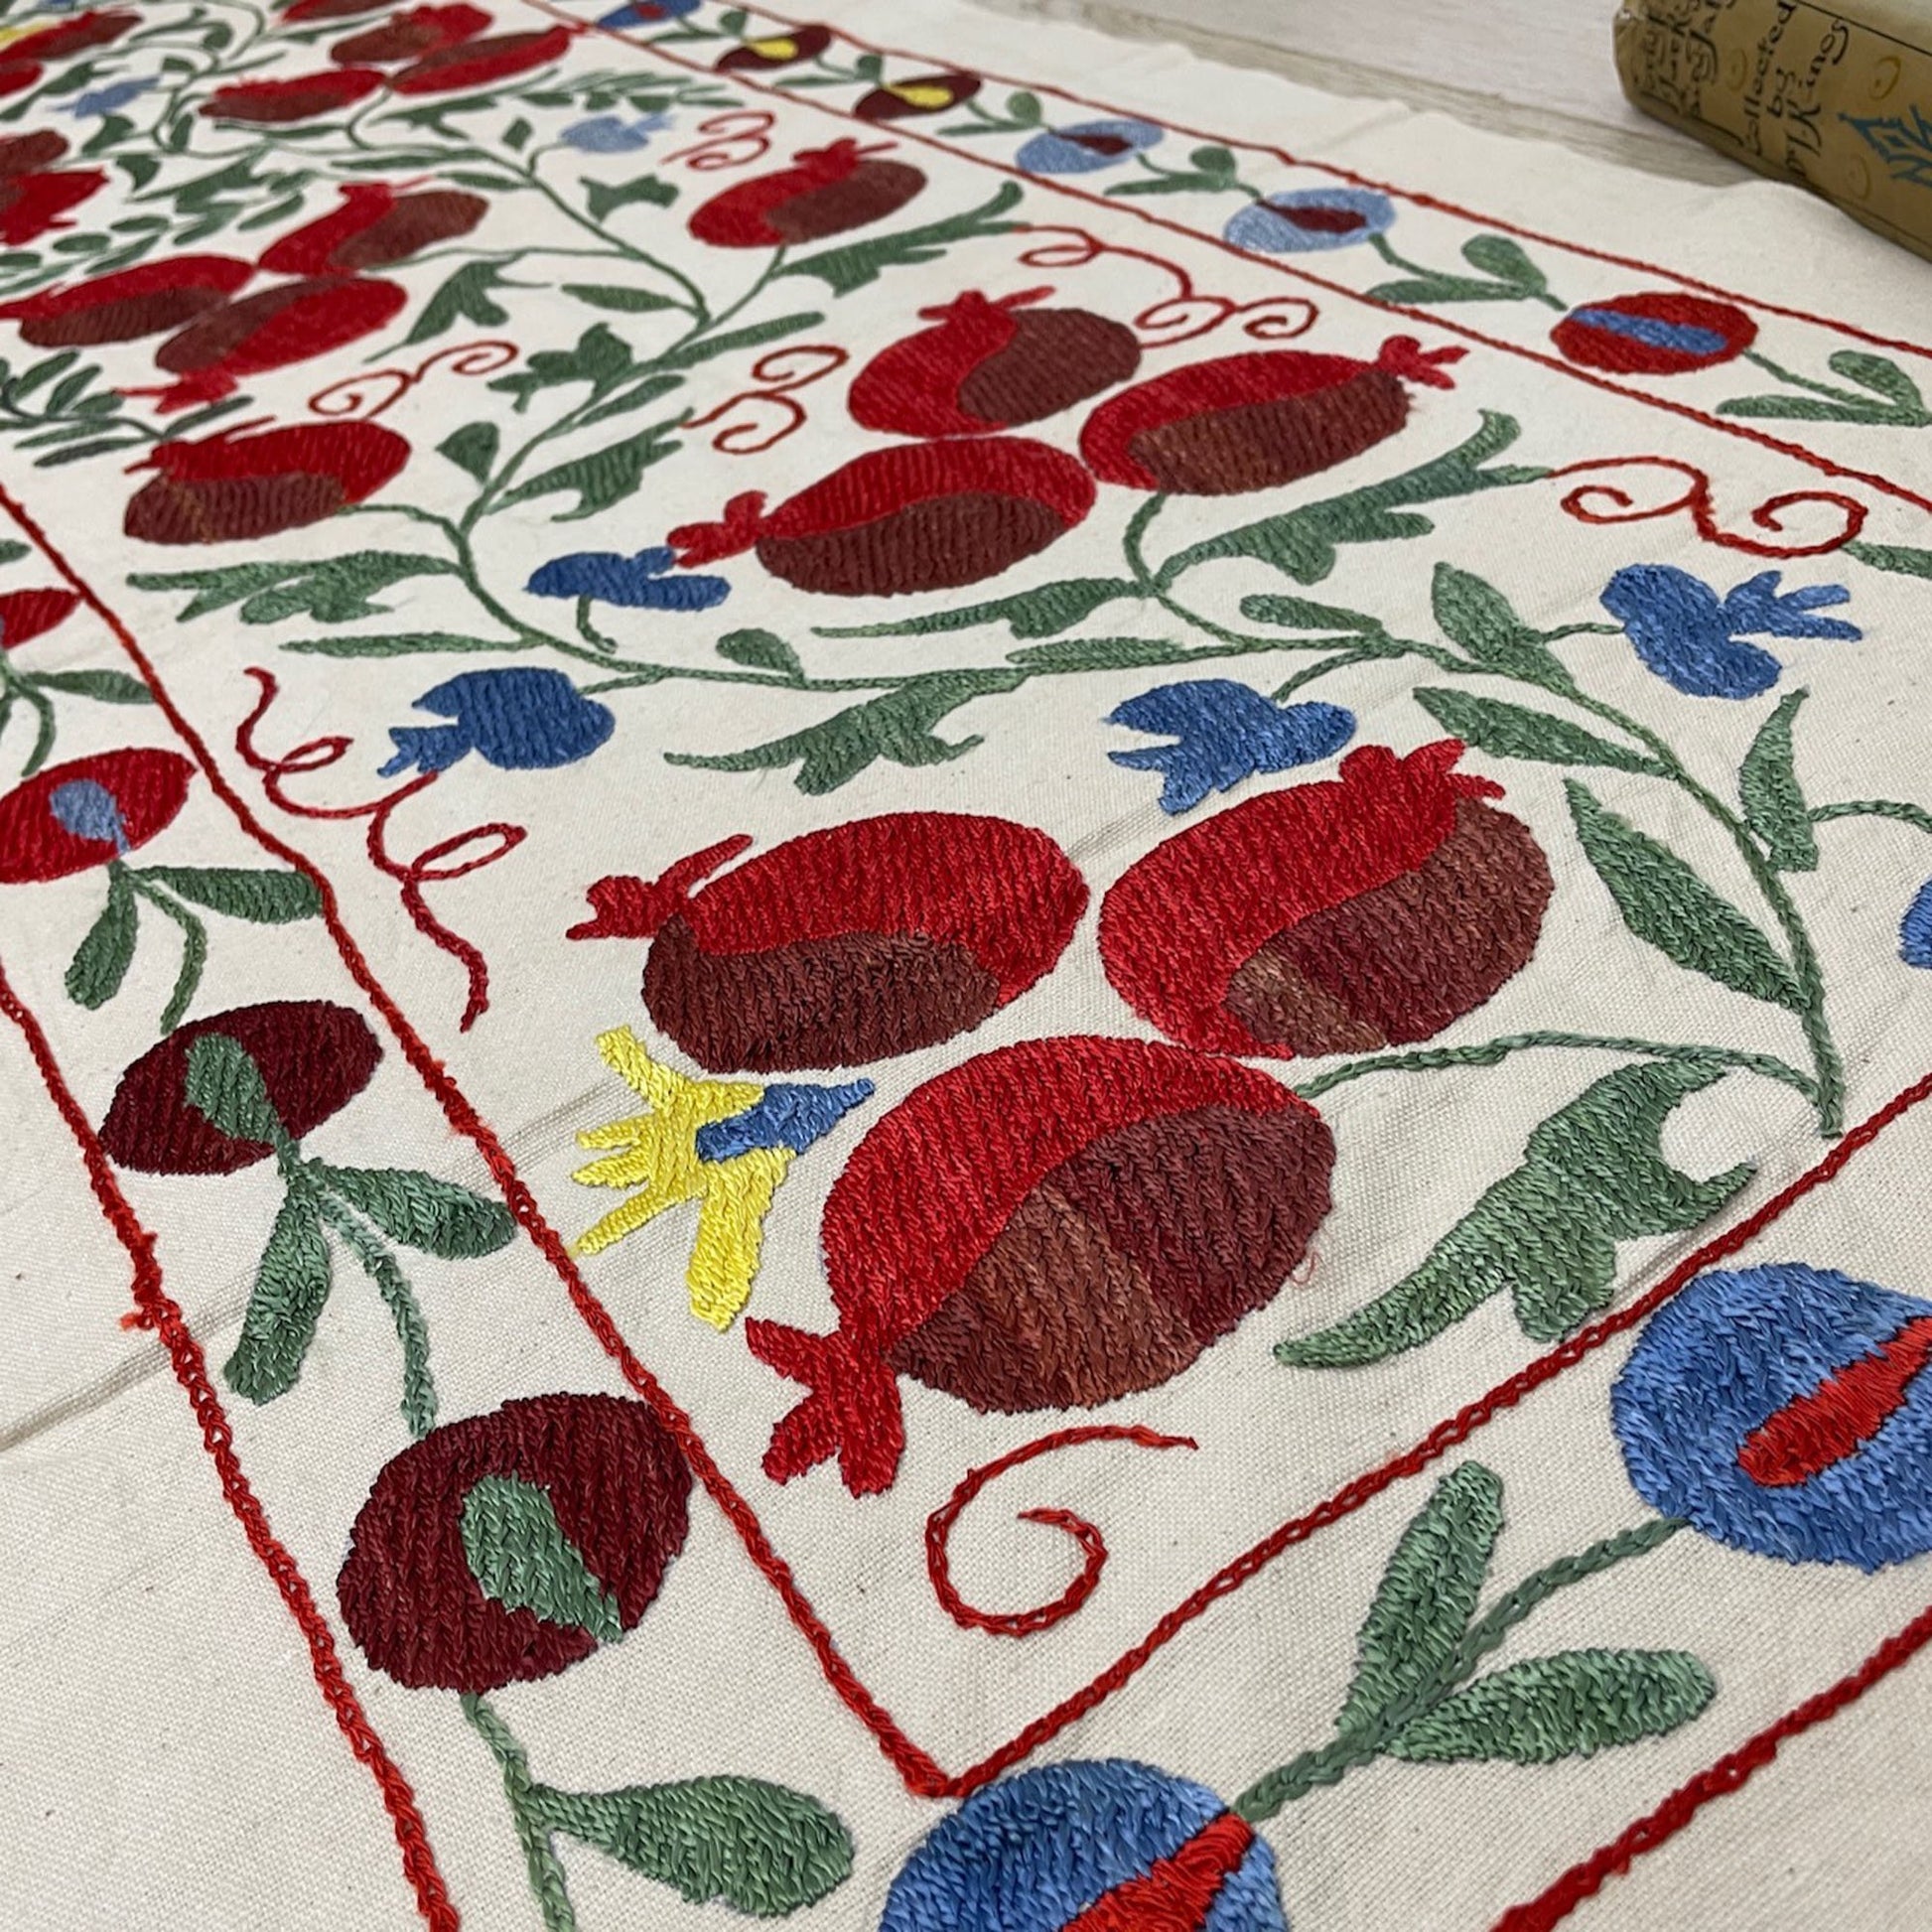 Uzbeki Suzani Hand Embroidered Textile Wall Hanging | Home Décor | Runner | 50cm x 178cm SUZ1205013 - Wildash London